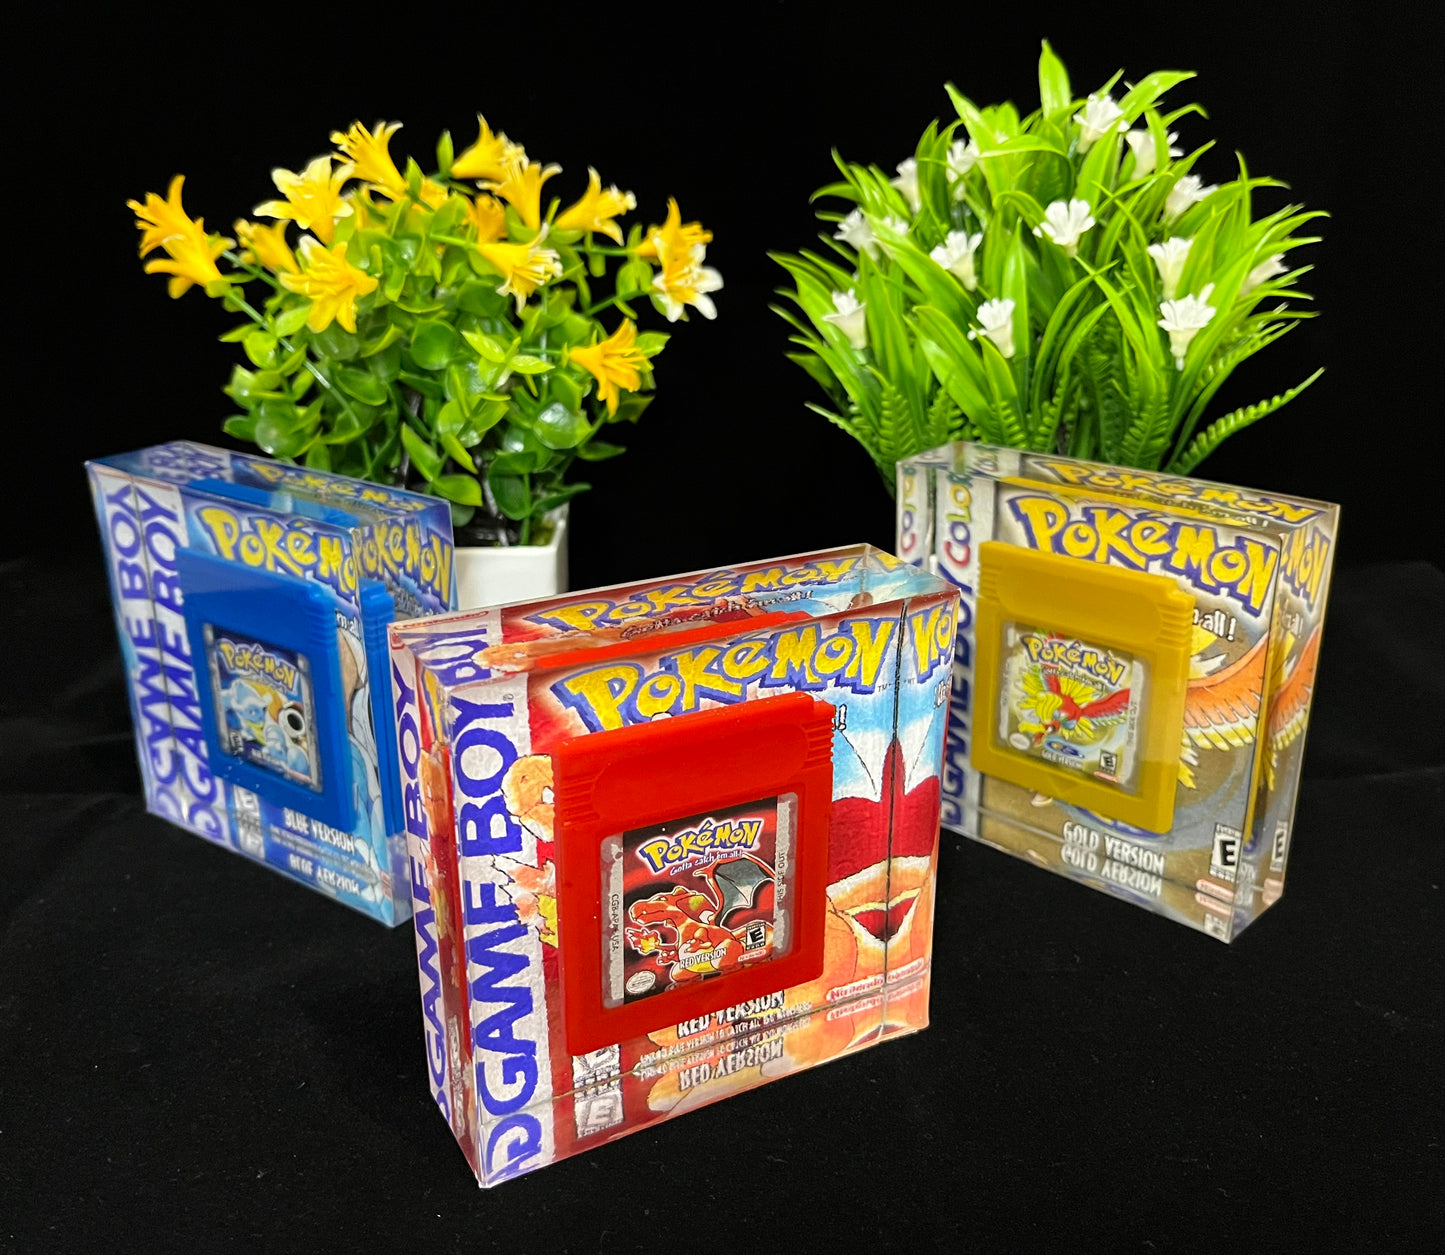 Pokémon Gameboy Color Display Nostalgia Handmade Piece - Red, Blue, or Gold